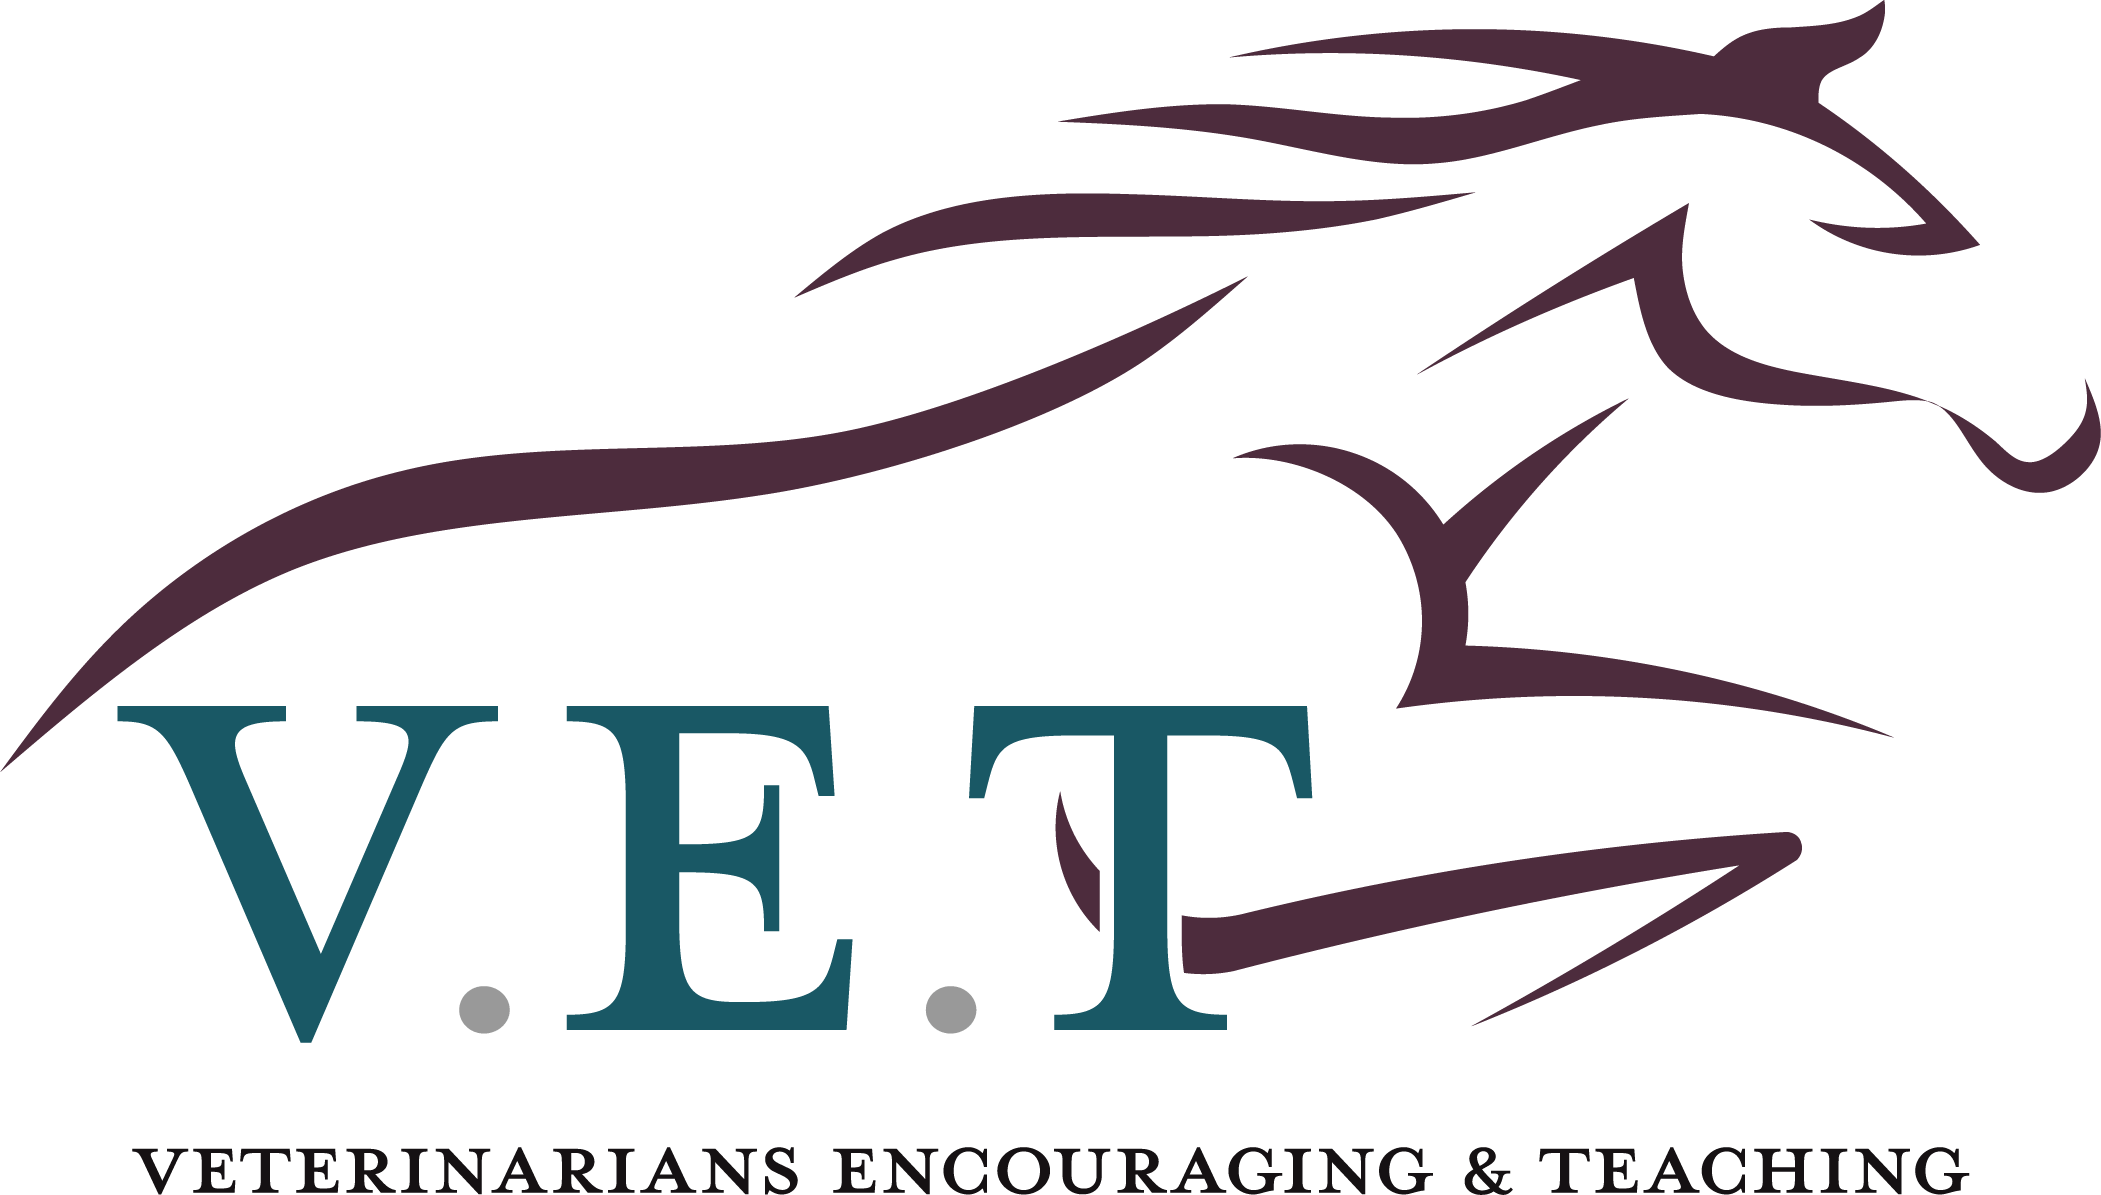 V.E.T. - Veterinarians Encouraging and Teaching